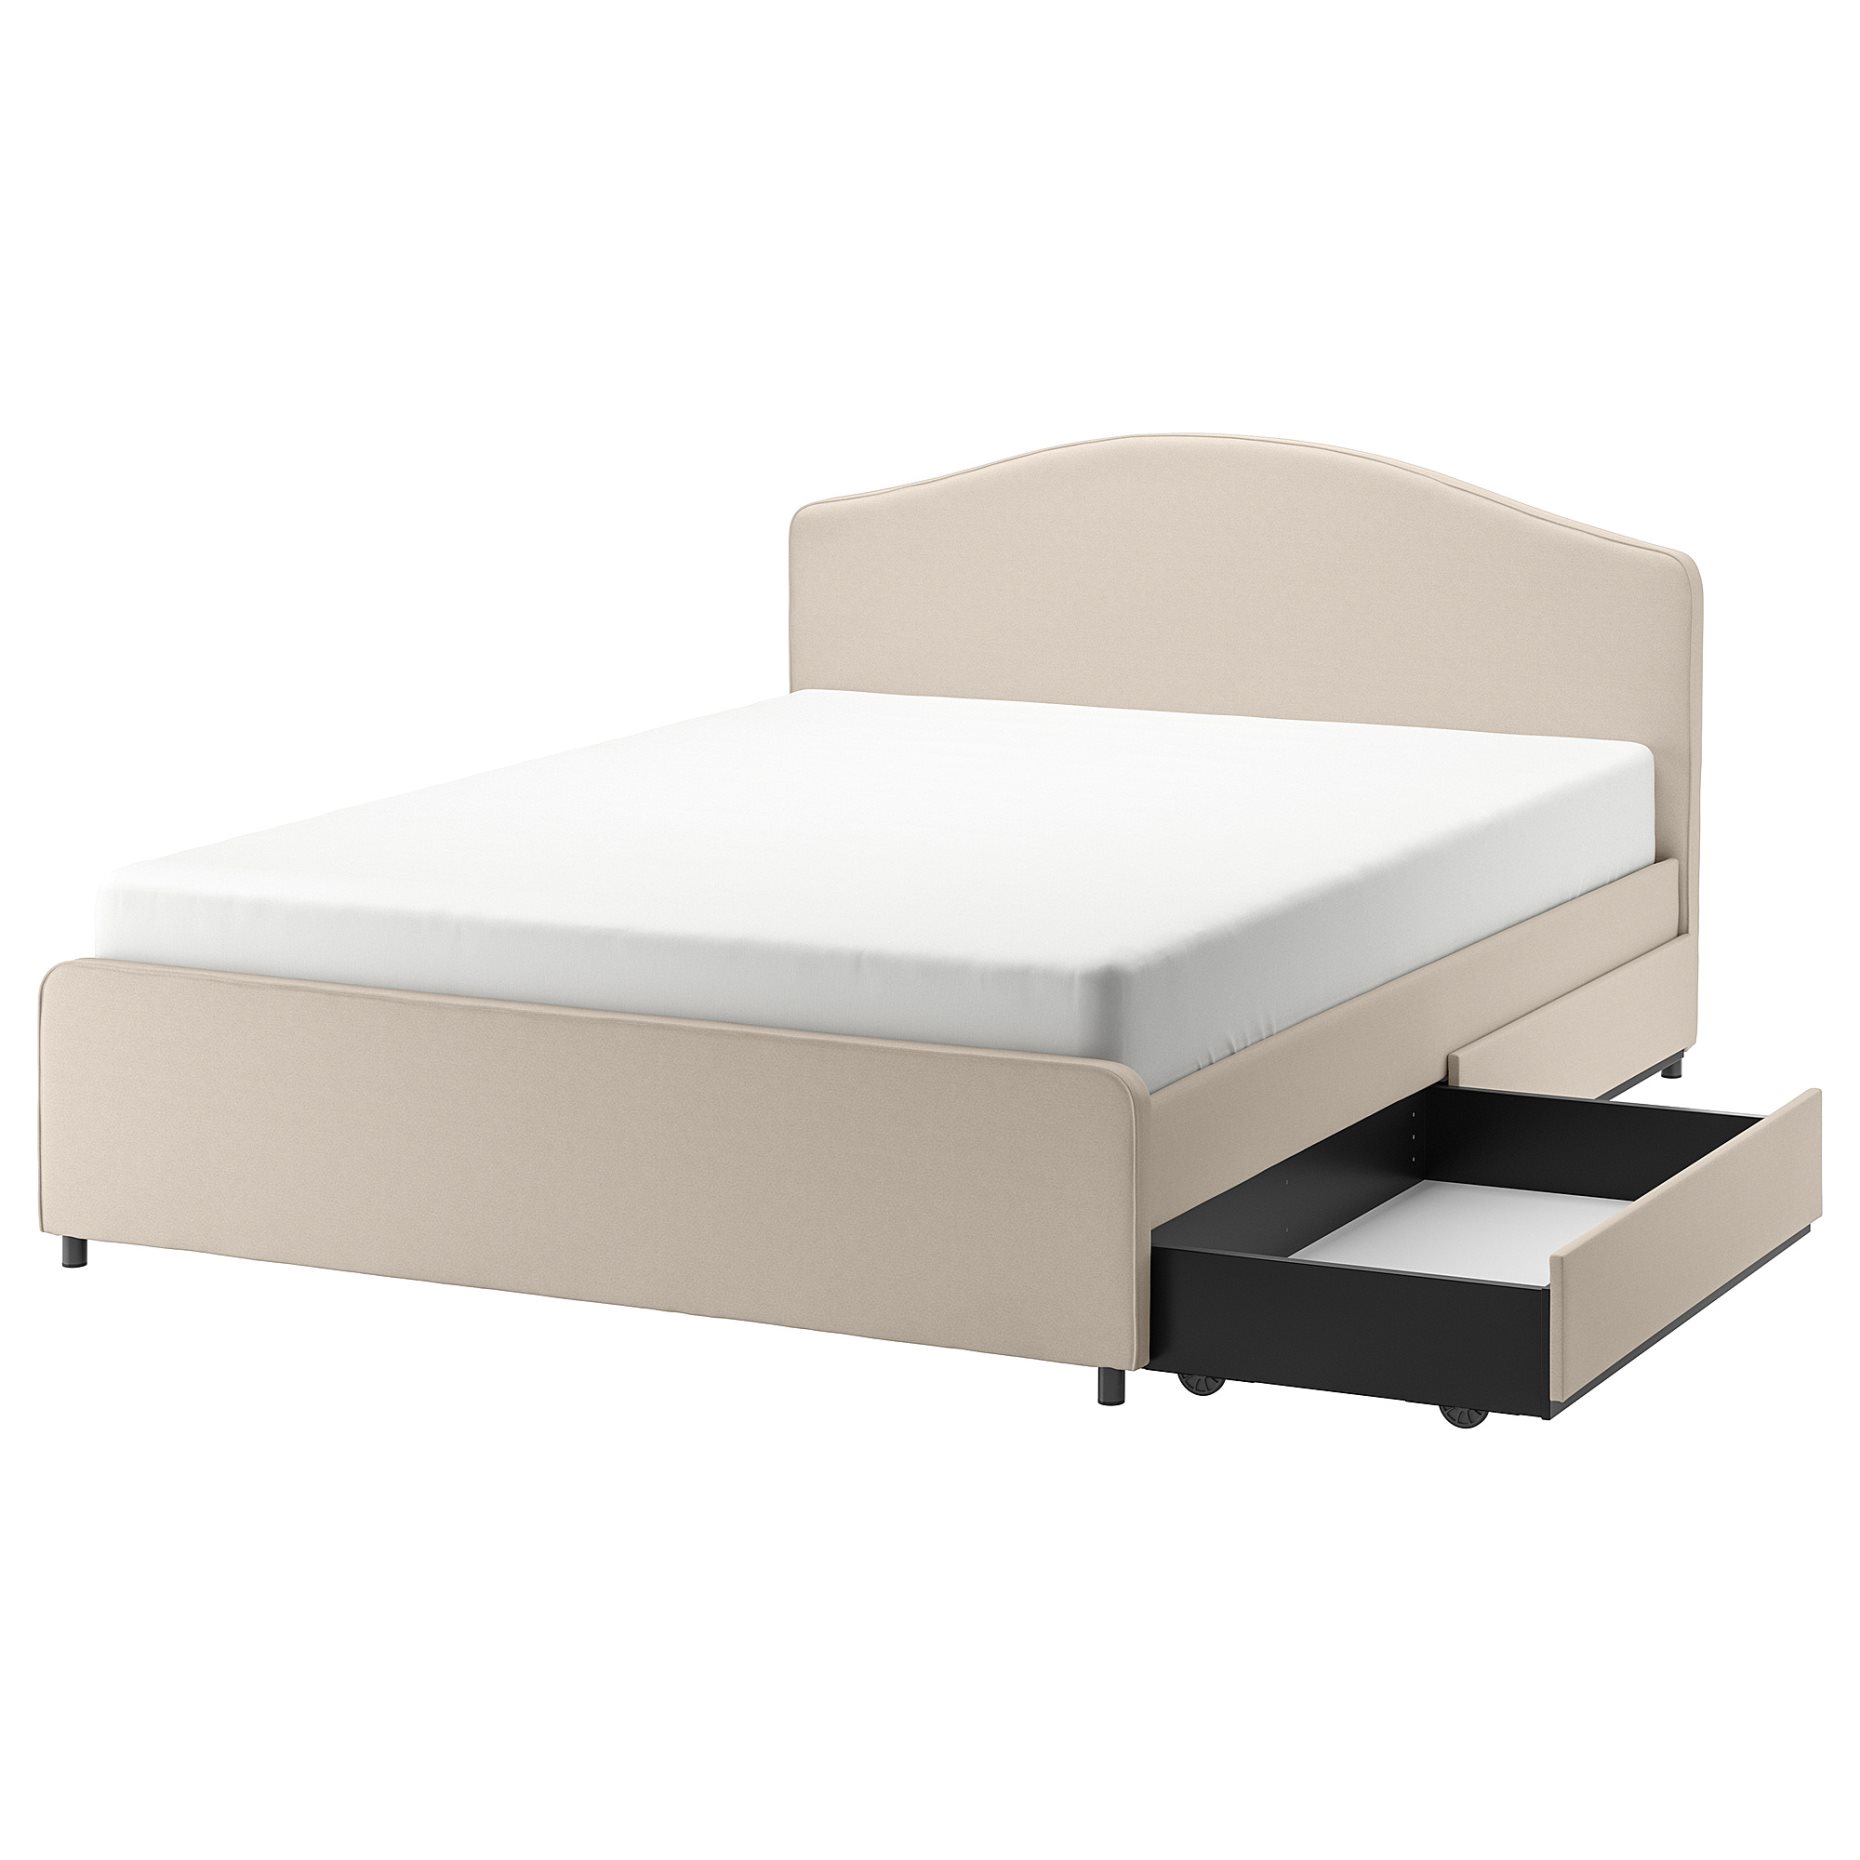 HAUGA, κρεβάτι με επένδυση/2 αποθηκευτικά κουτιά, 160X200 cm, 093.366.49